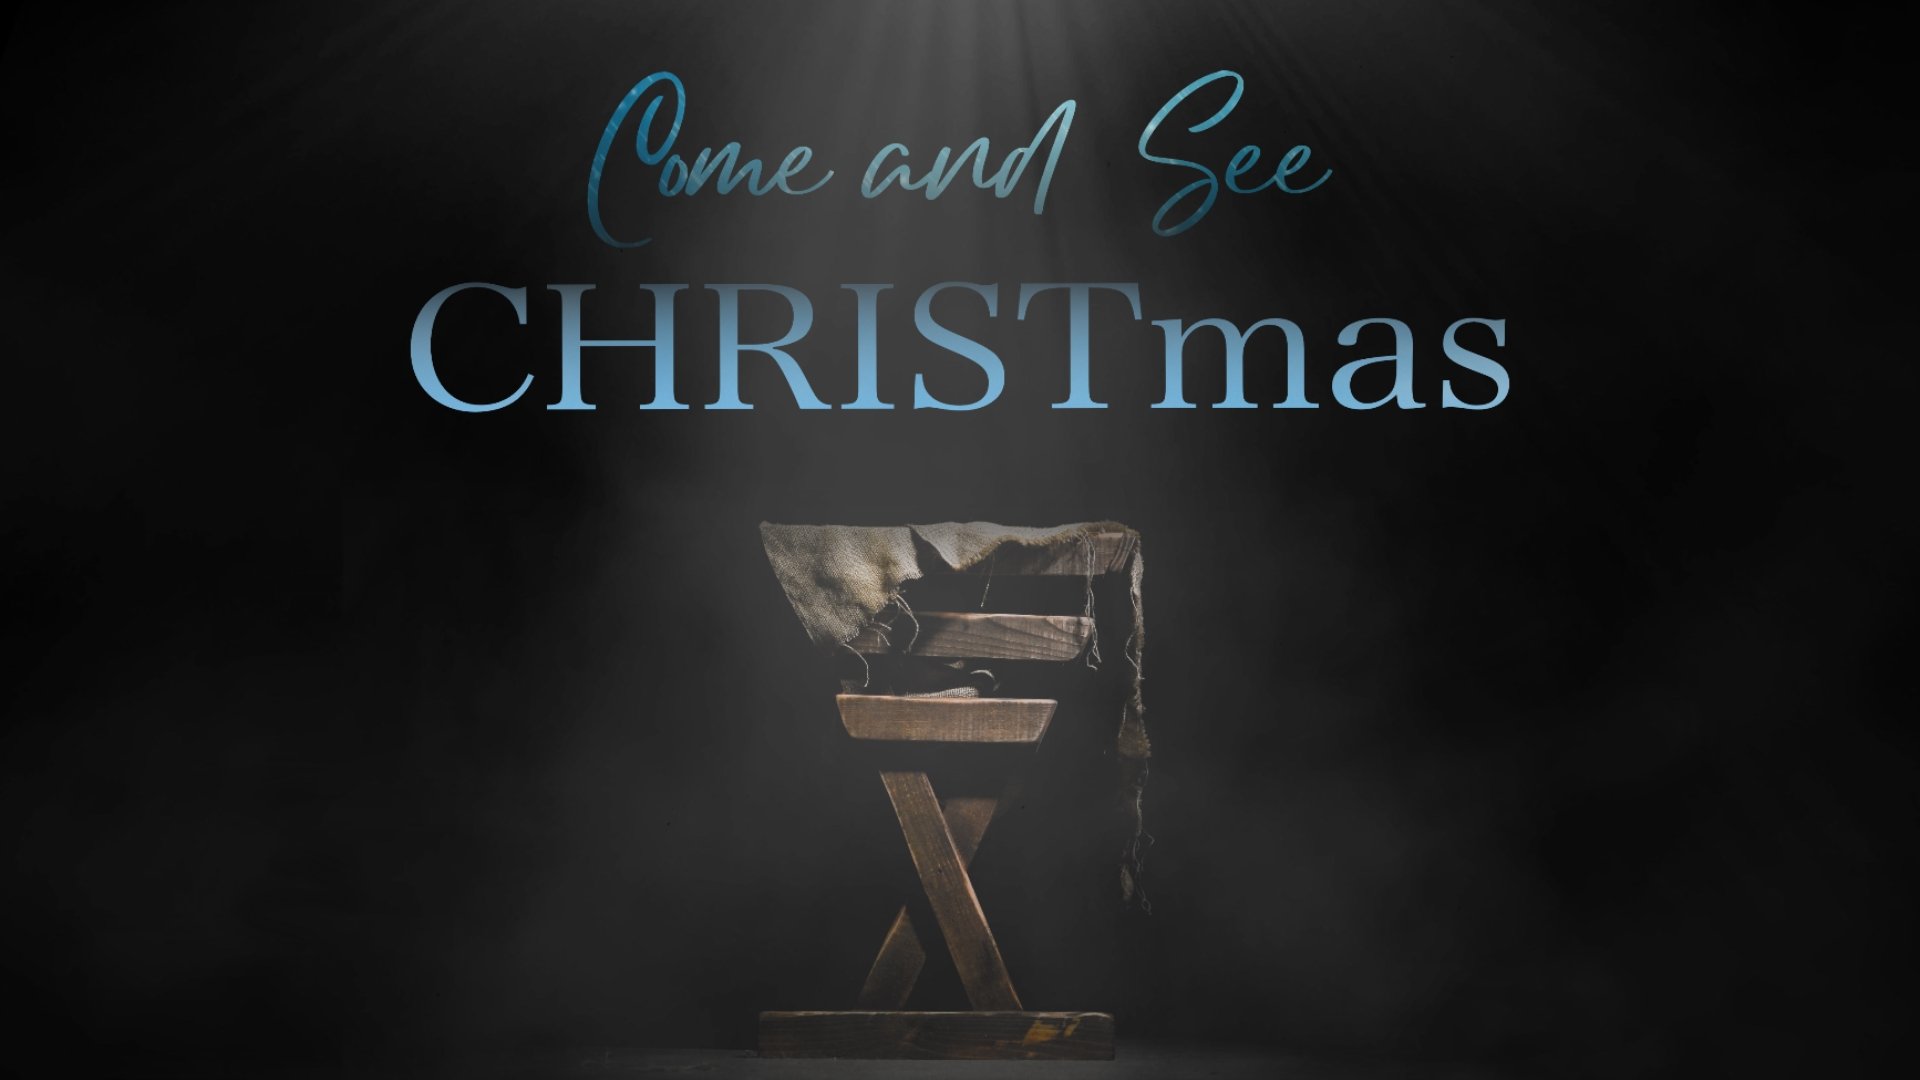 COME AND SEE CHRISTMAS SERMON SERIES GRAPHIC.jpg